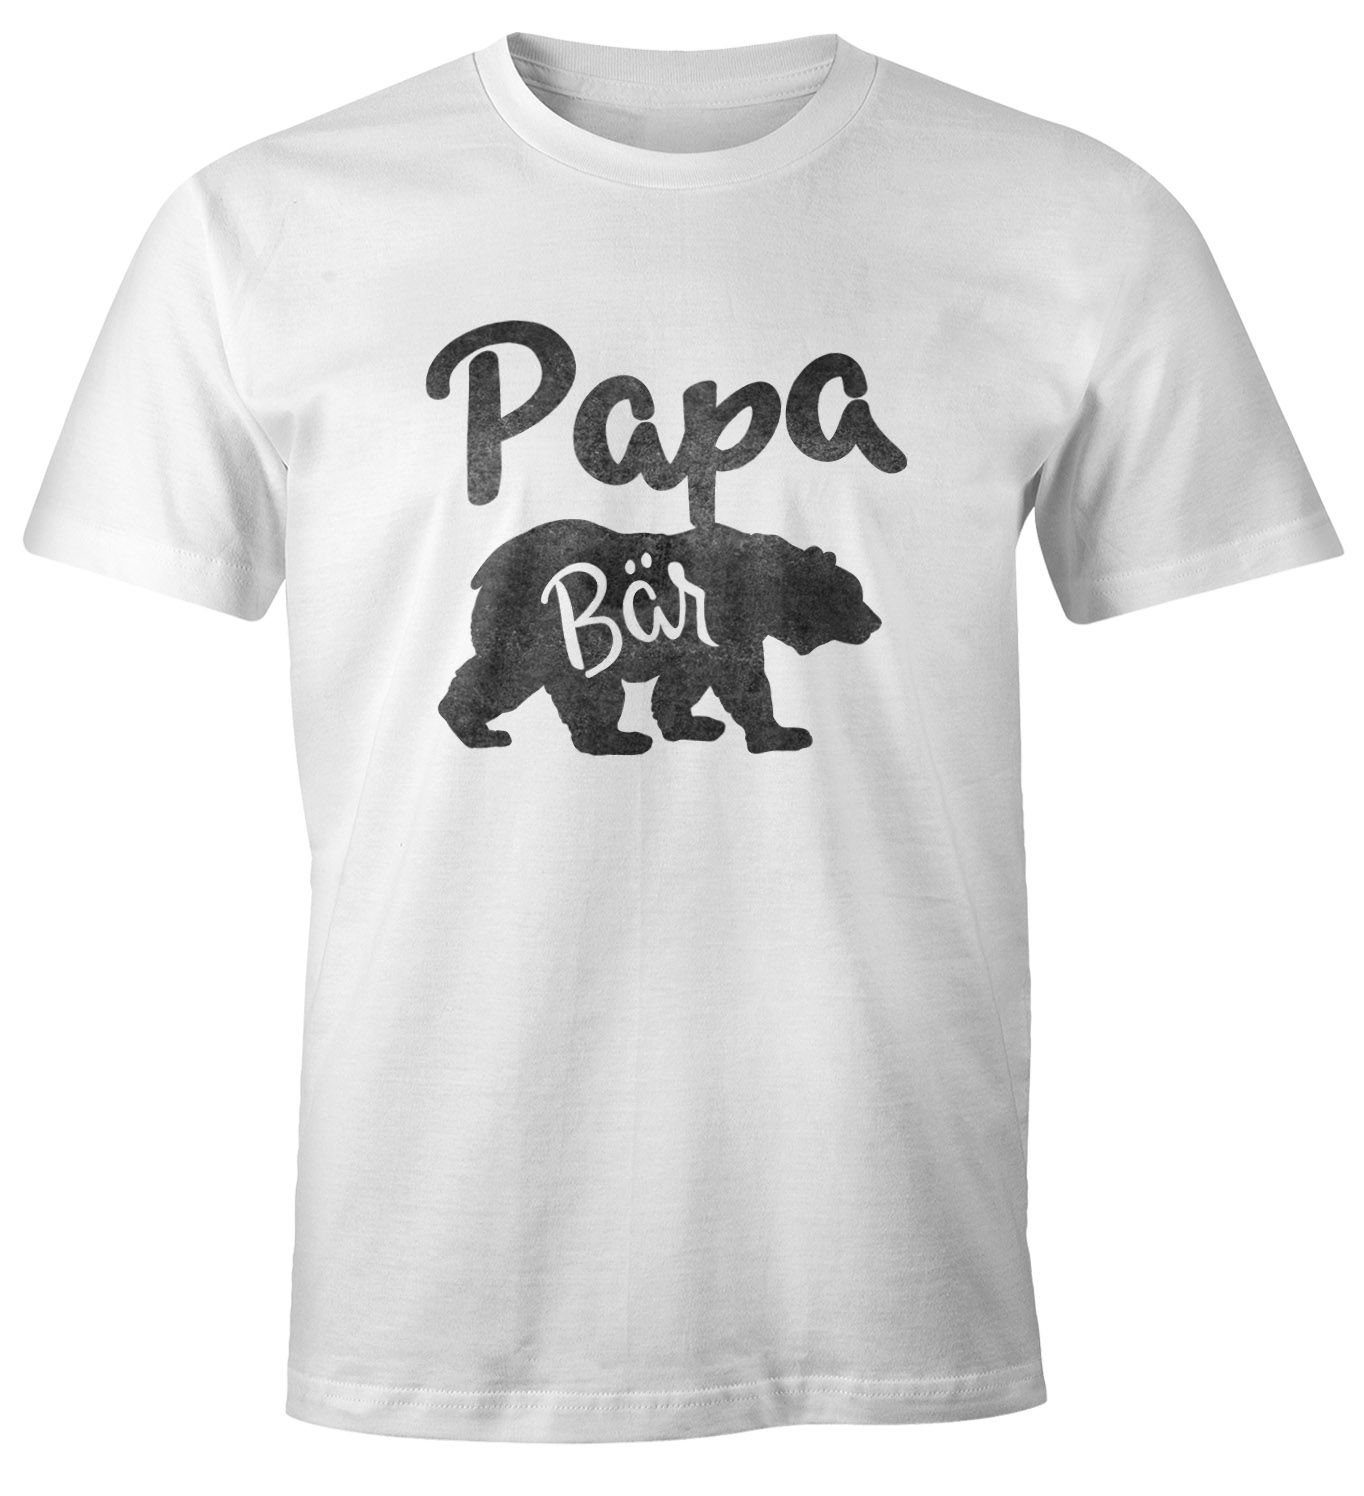 Moonworks® MoonWorks Print-Shirt mit Familie Shirt Watercolor Print weiß Herren Bären T-Shirt Bär Papa Papa